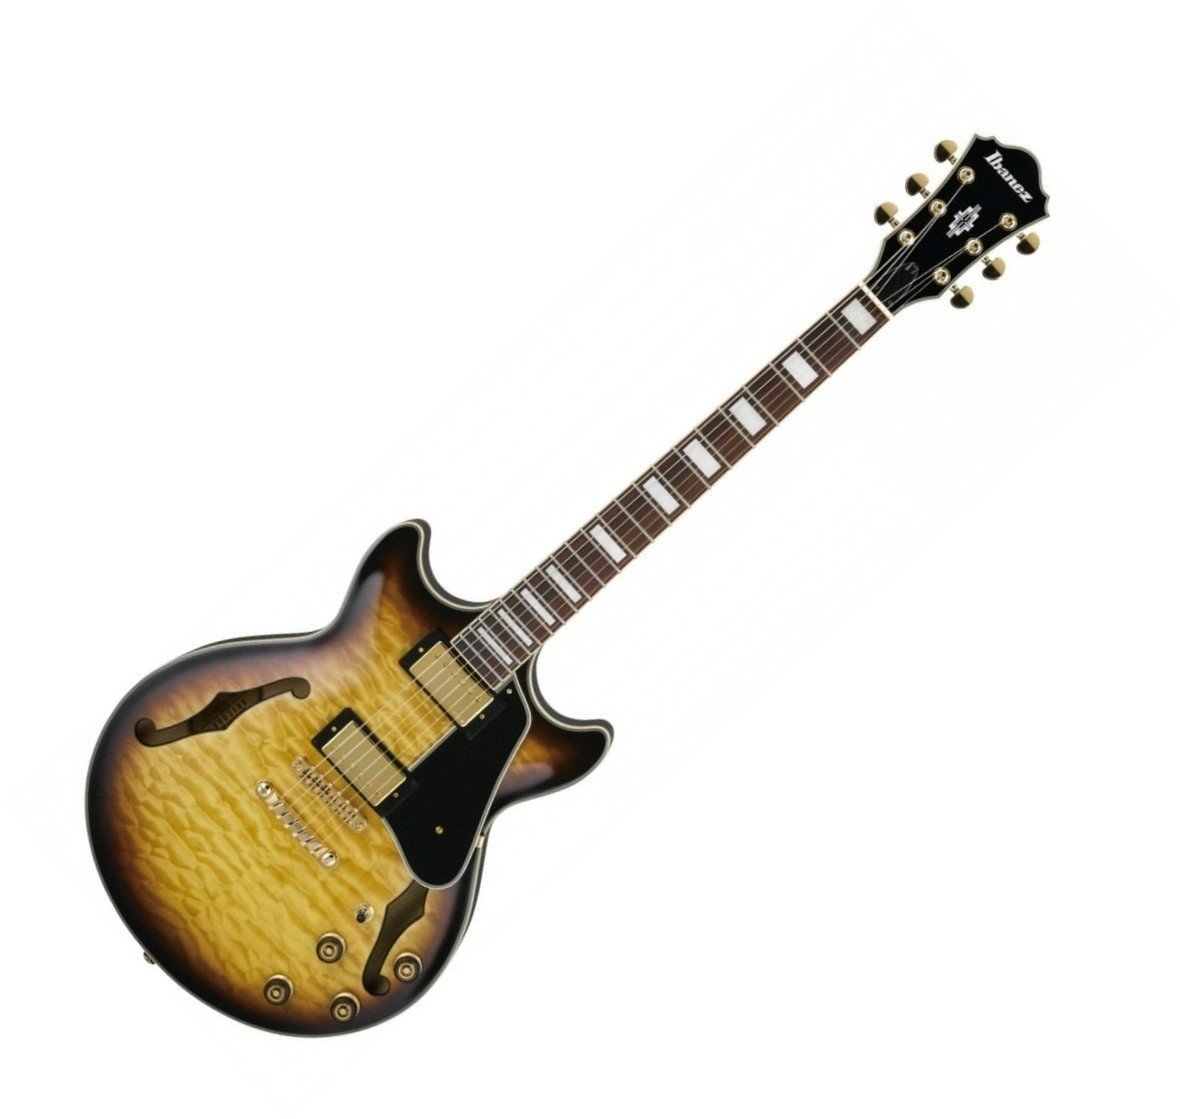 Semiakustická kytara Ibanez AM93-AYS Antique Yellow Sunburst